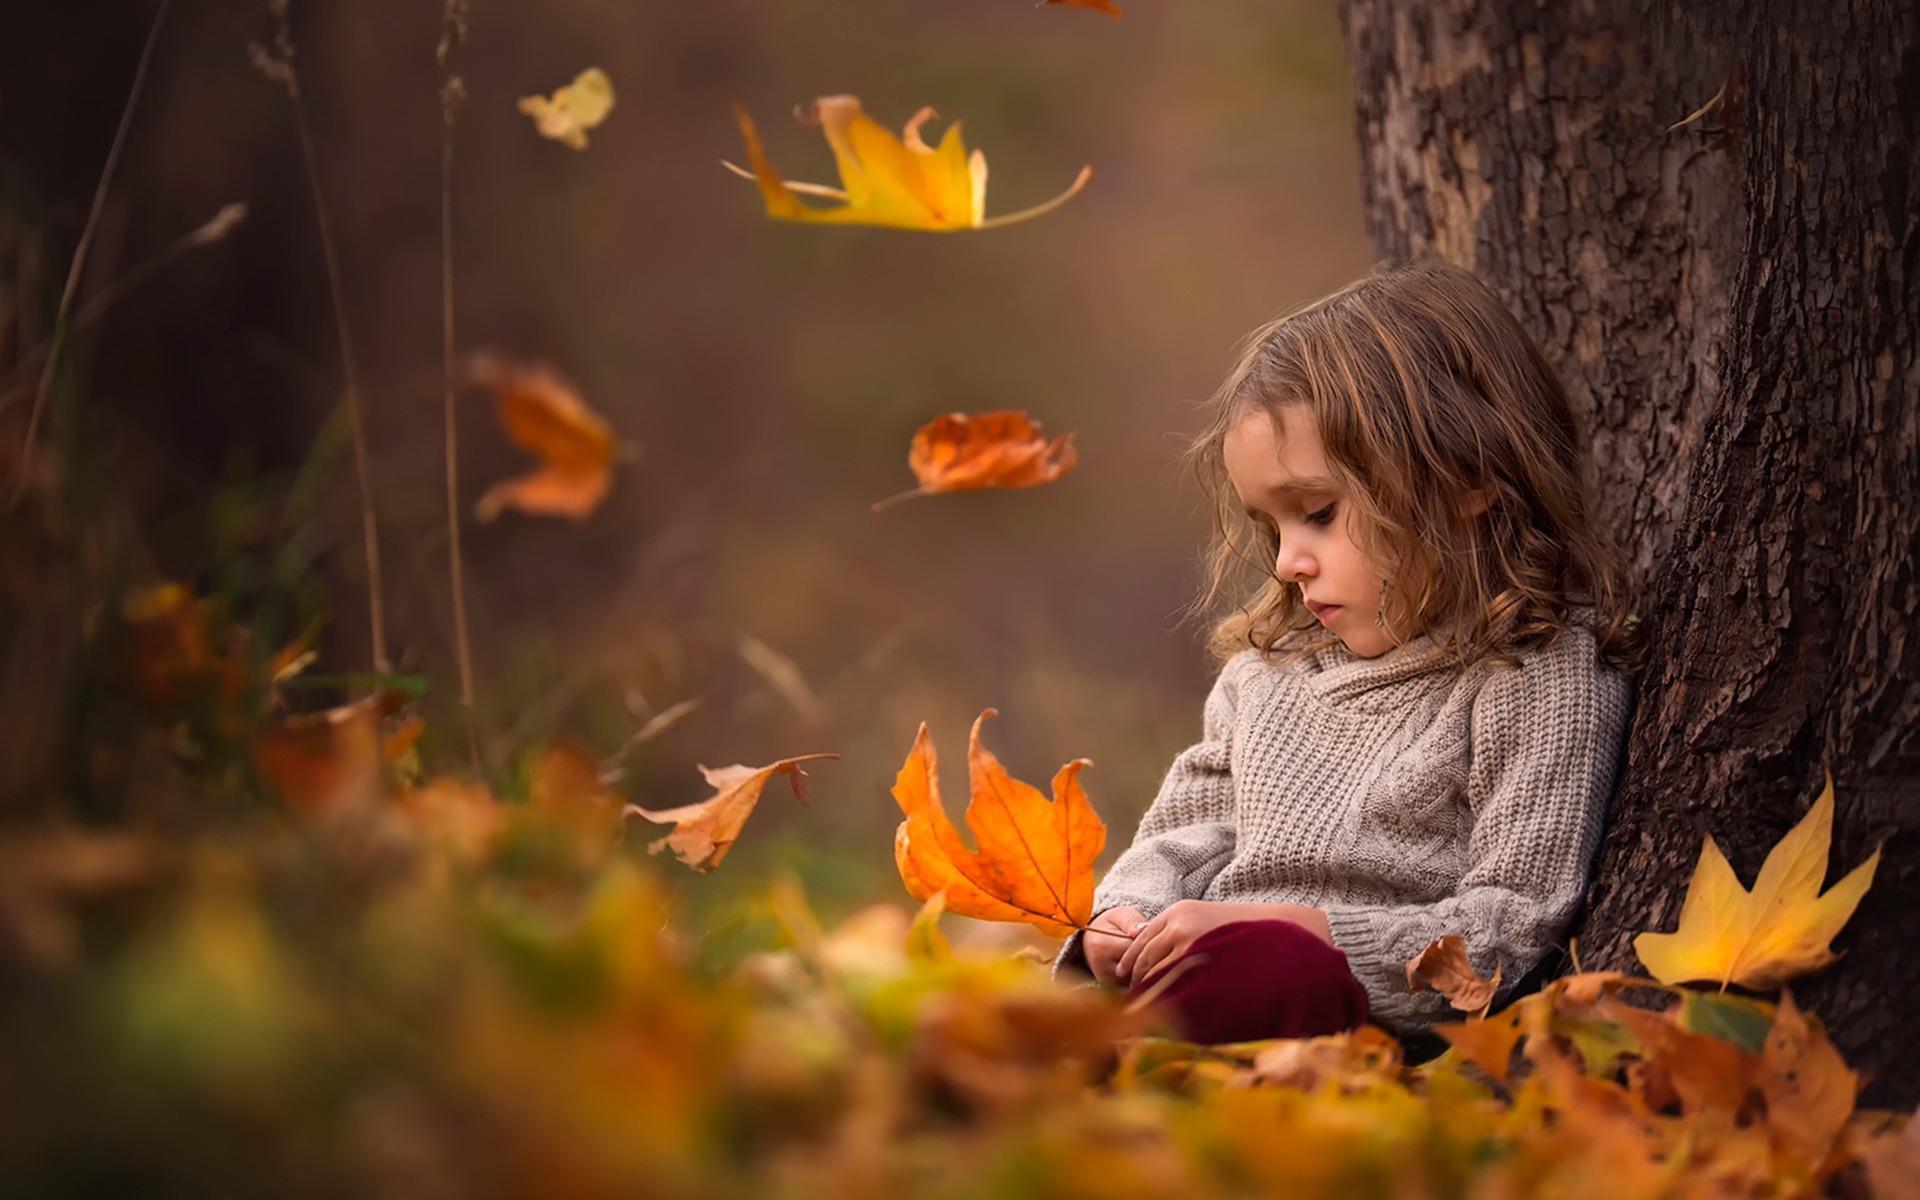 HD wallpaper: Sad Girl Autumn Leaves, girl's gray sweater